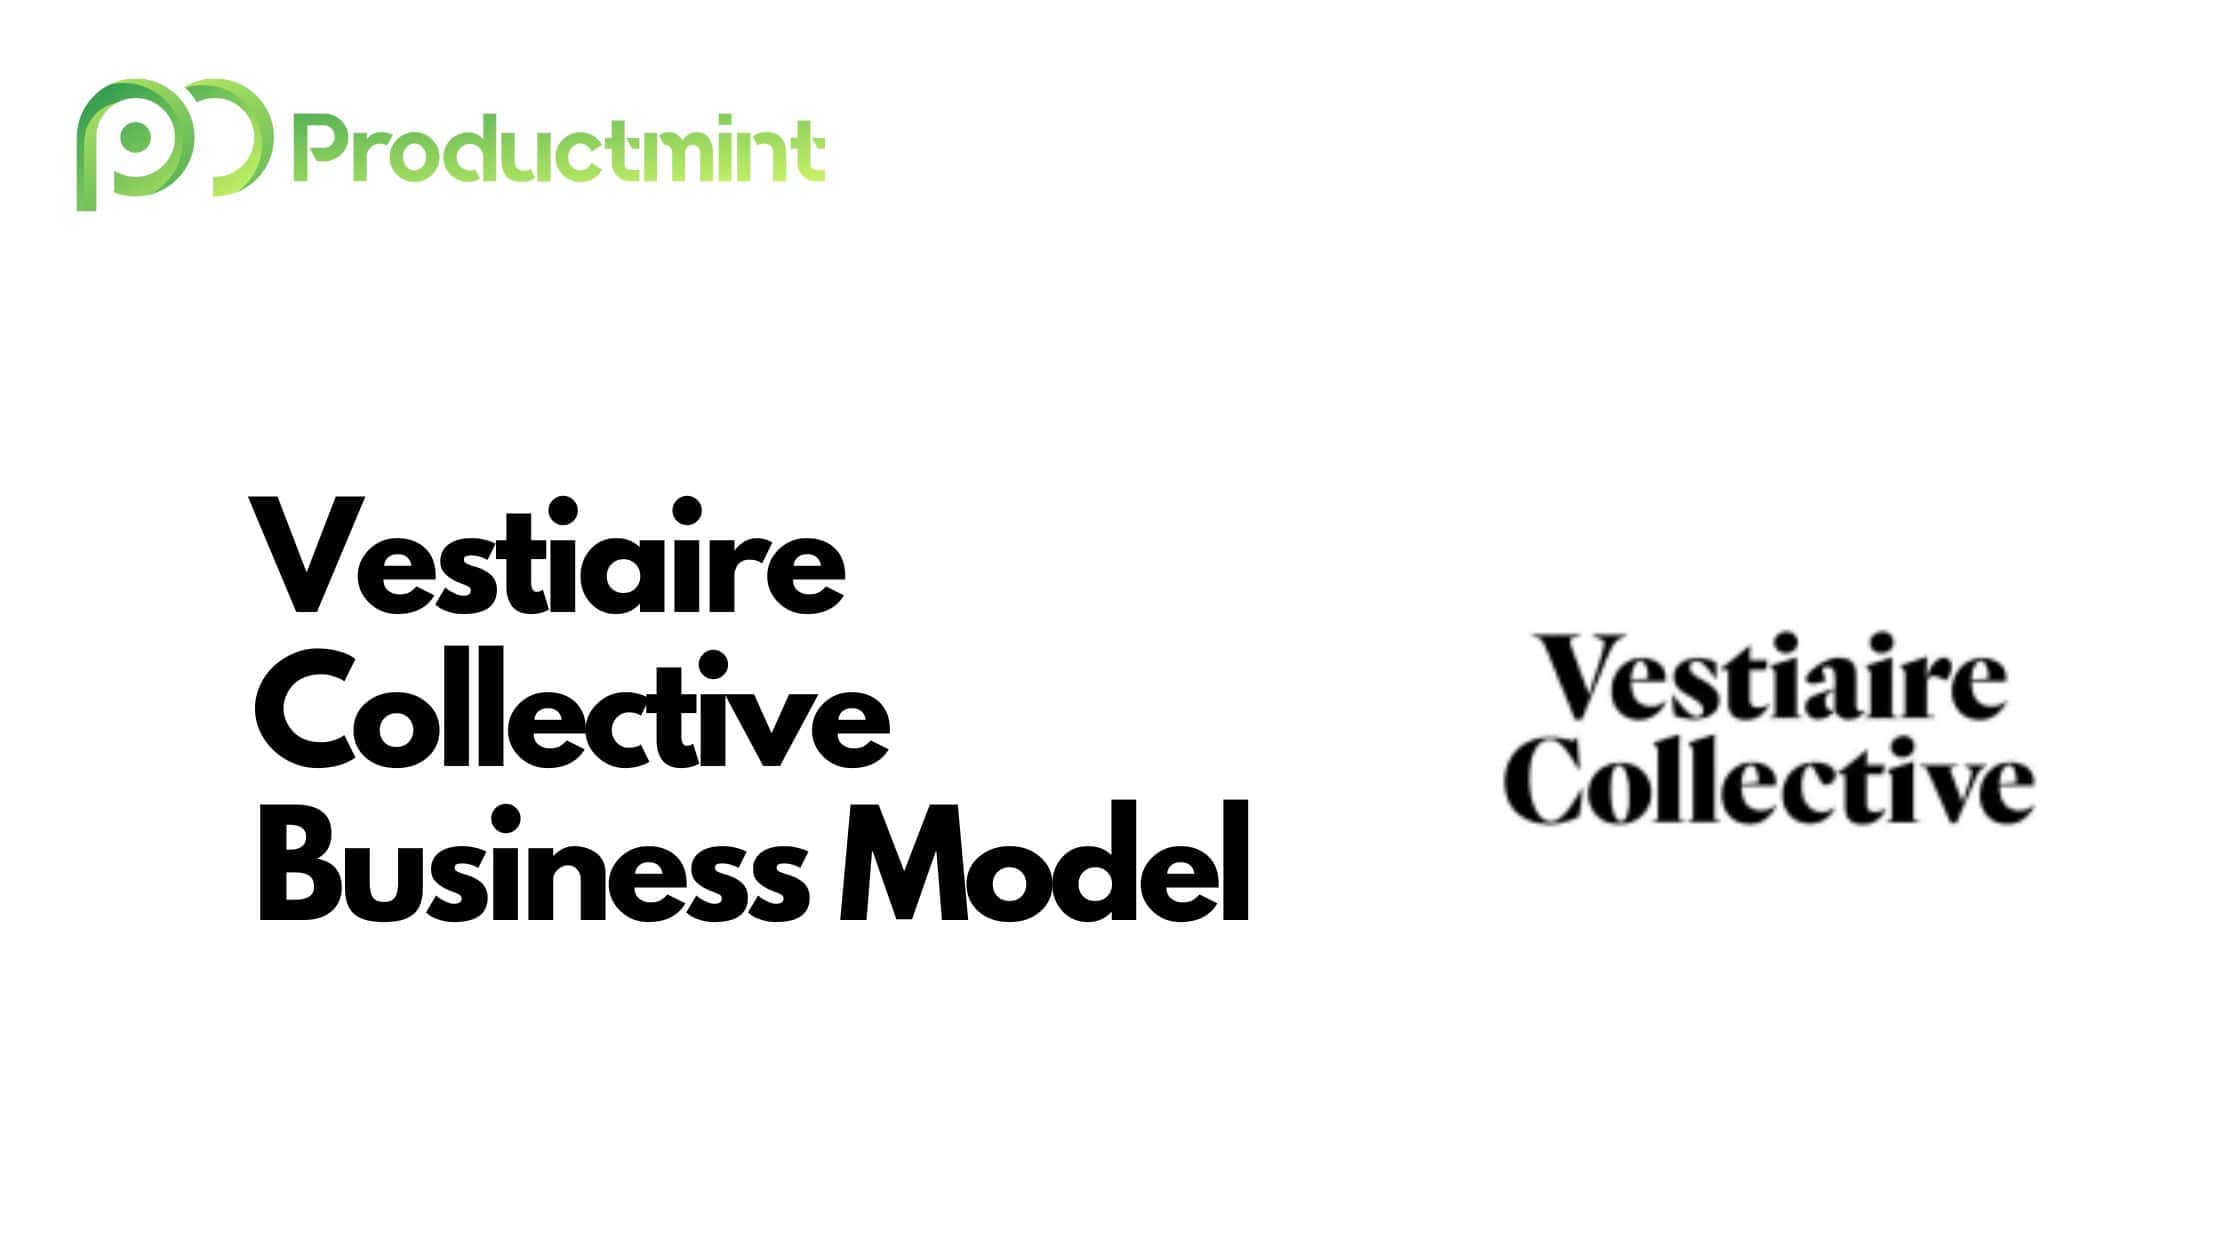 Vestiaire Collective Business Model